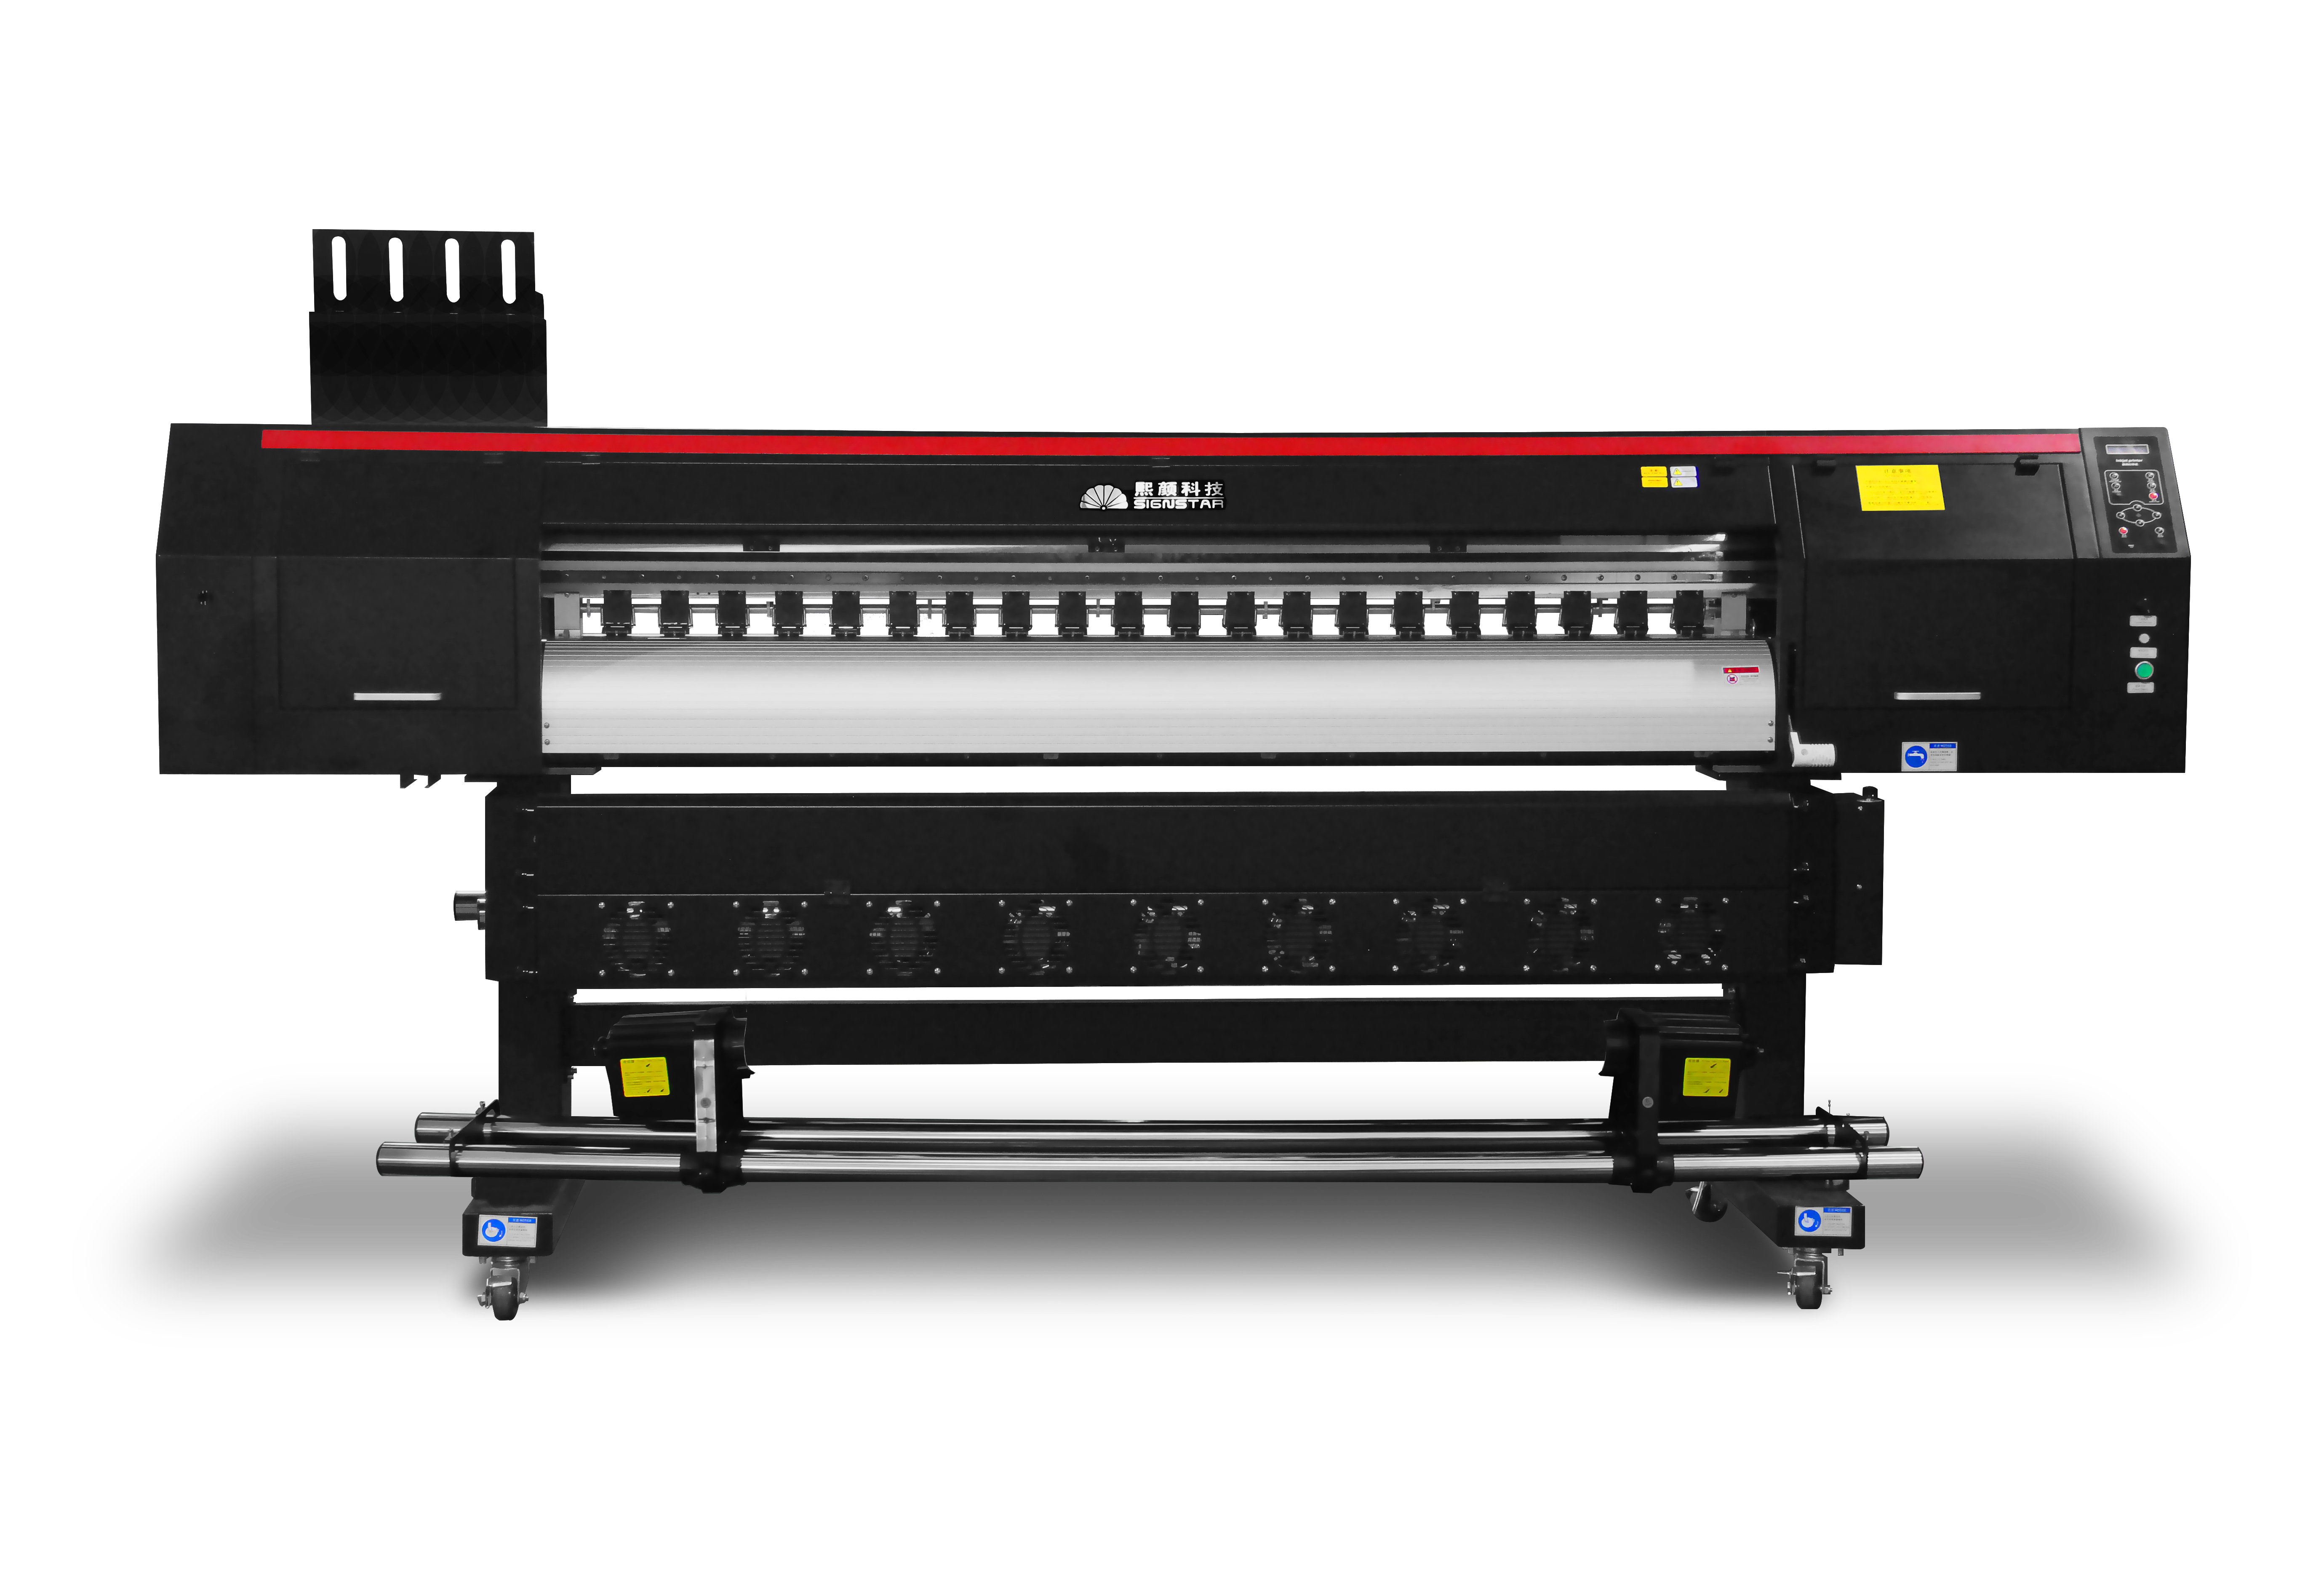 Large Format Heat Press Machine Heat Transfer Sublimation Printing